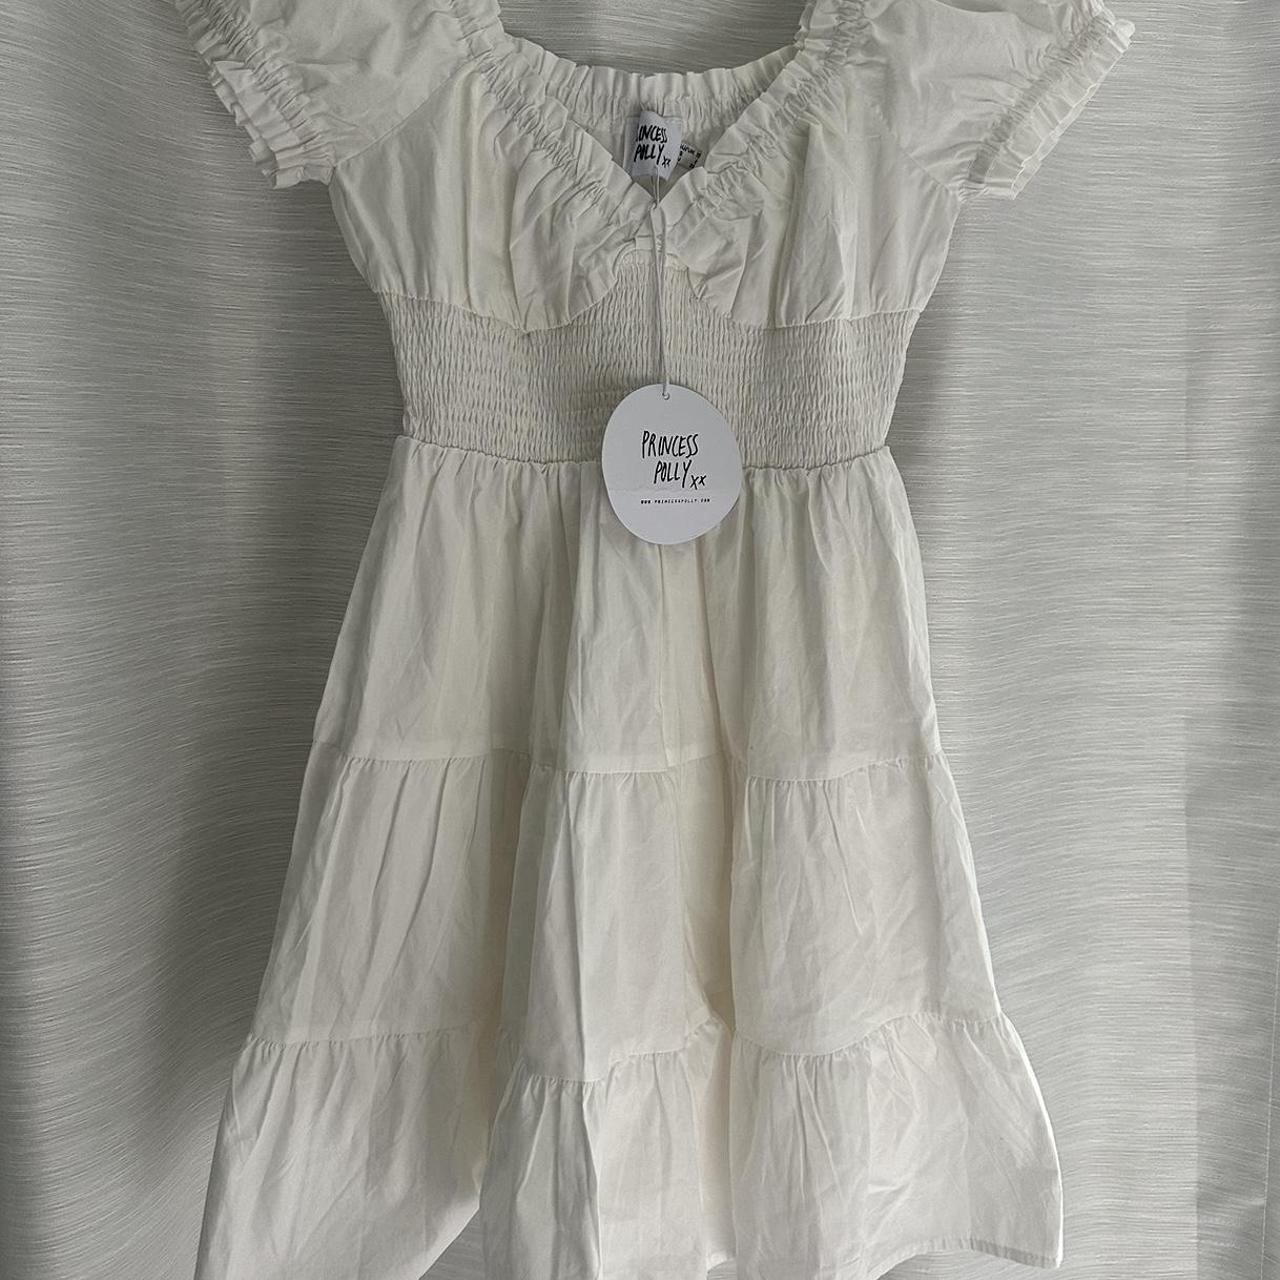 NWT Princess Polly White Dress Size 6 Never worn,... - Depop